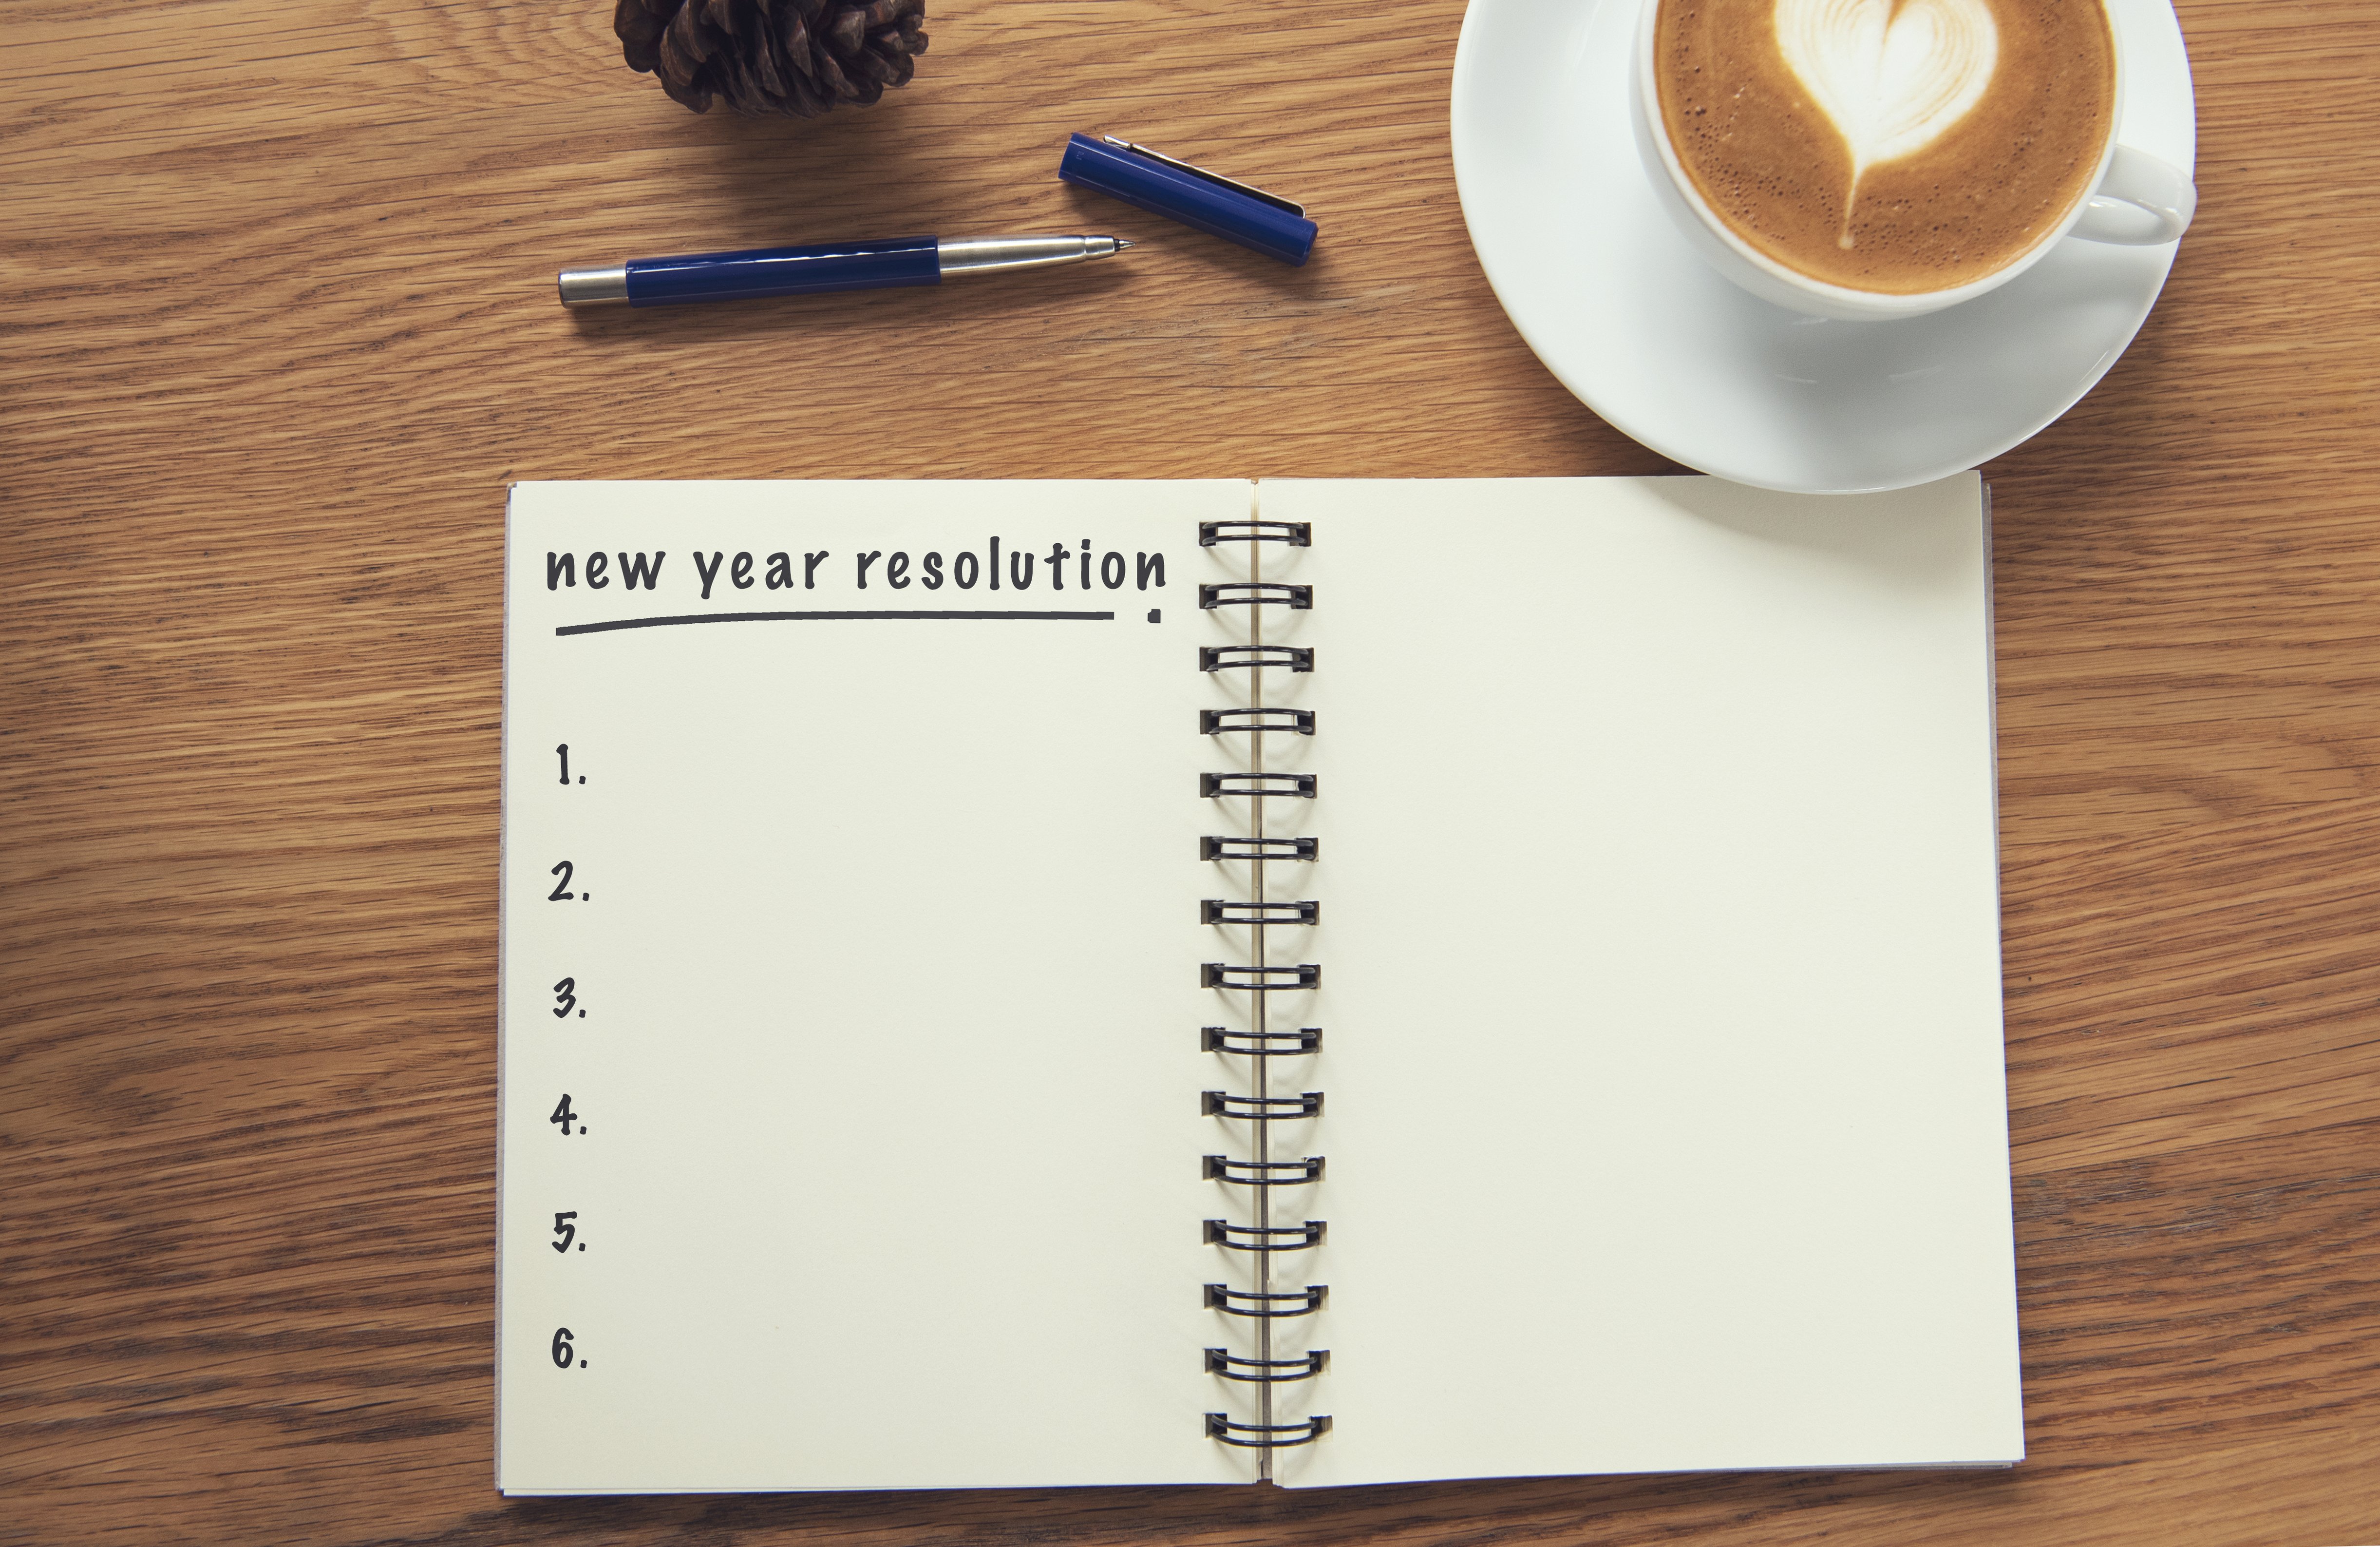 IT resolutions